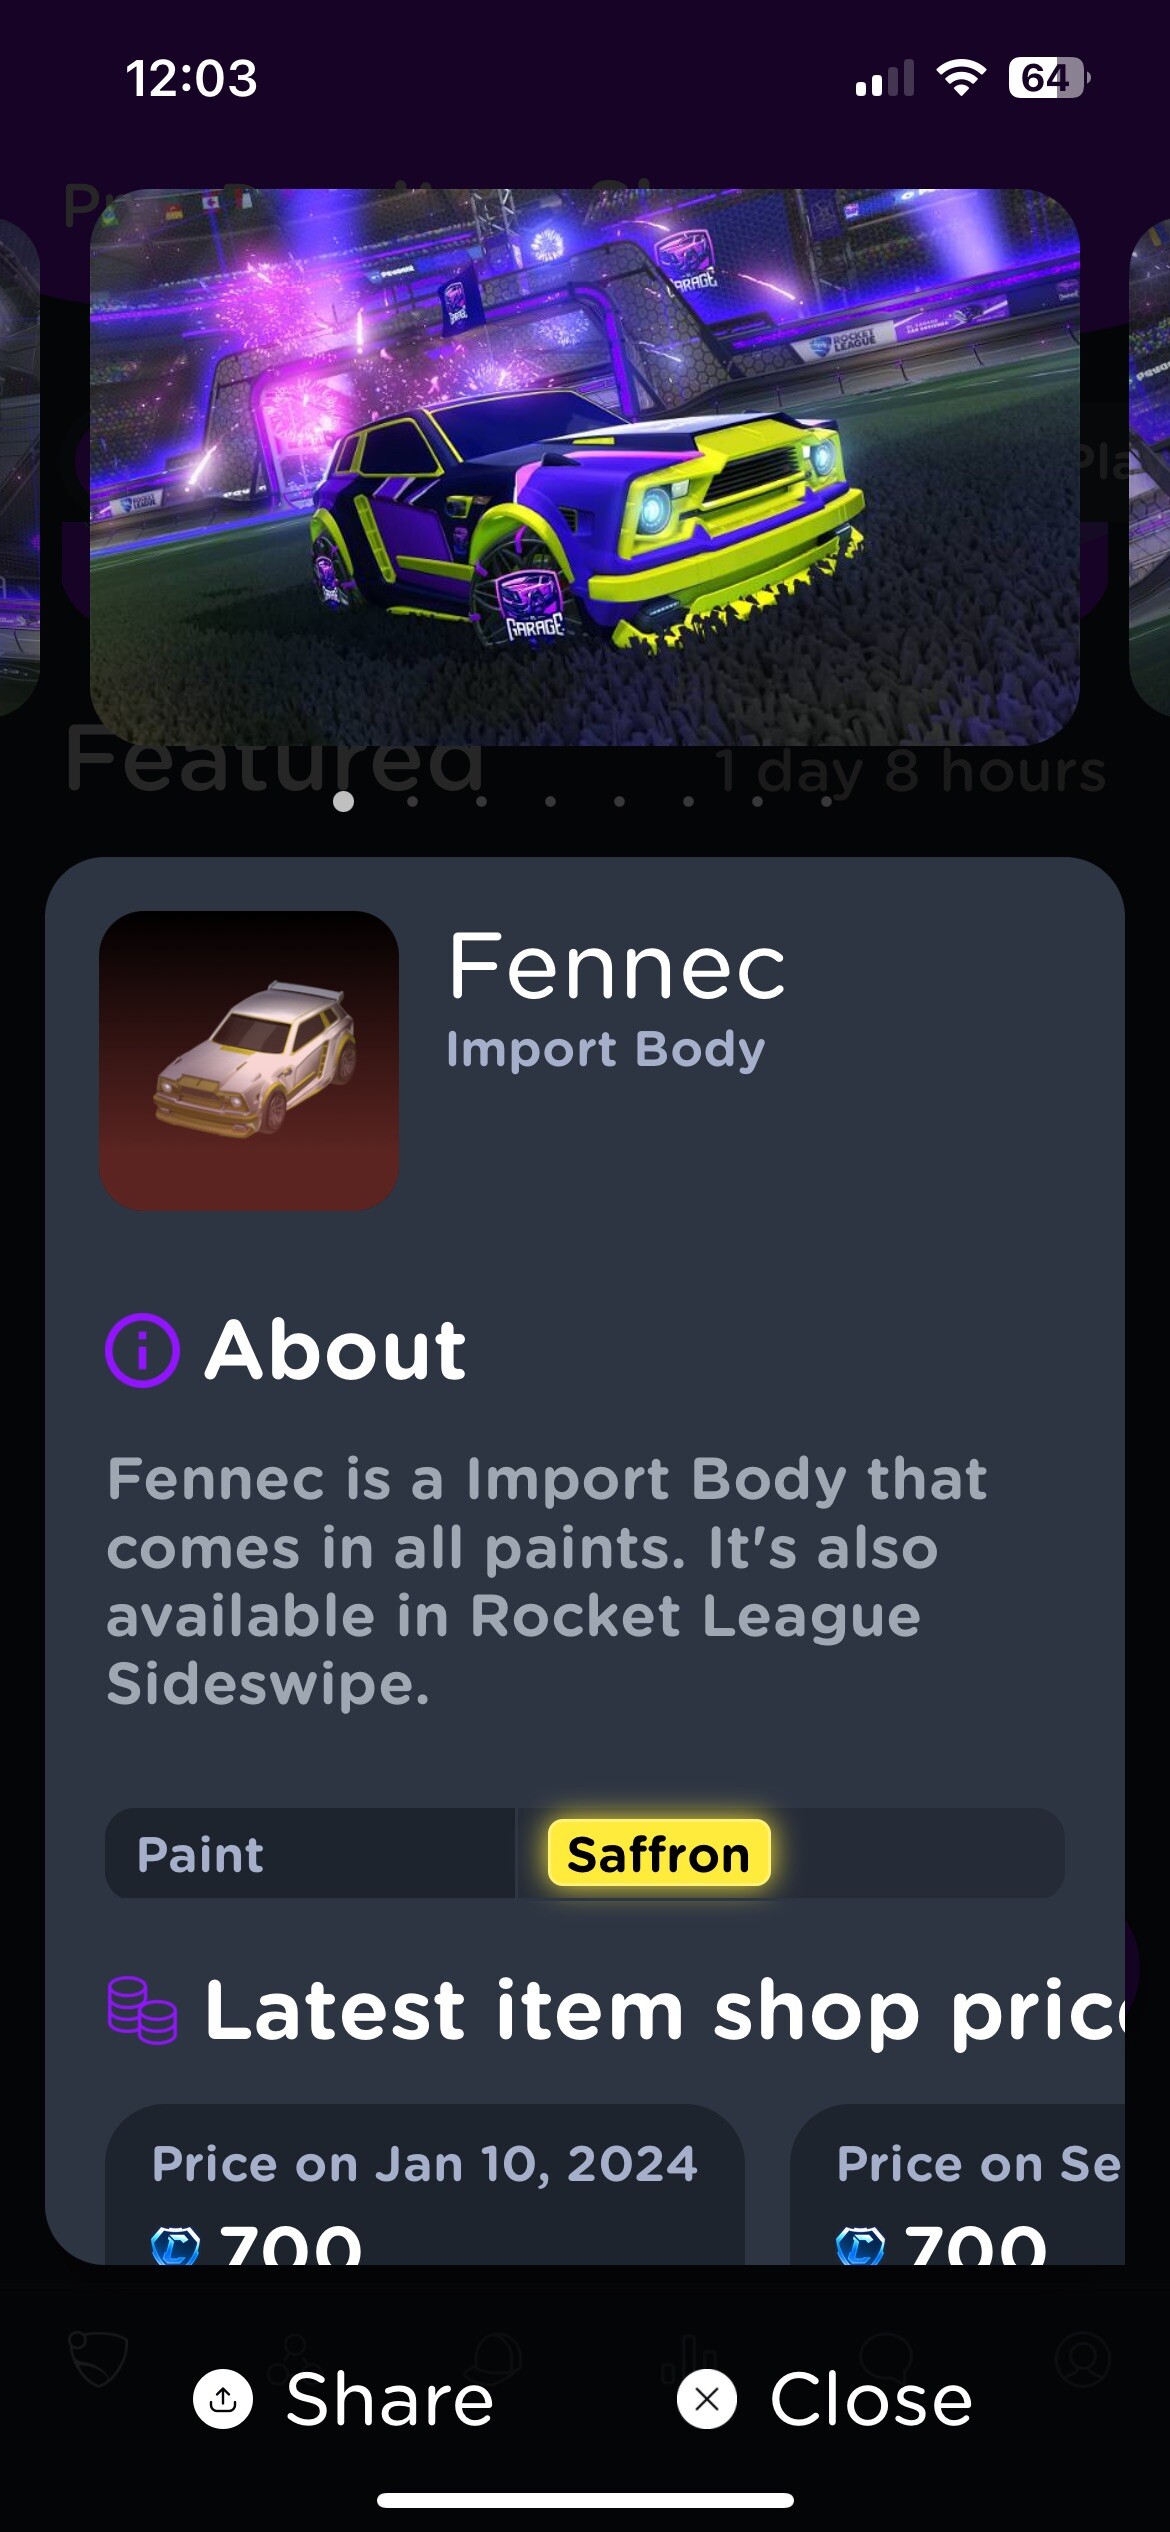 The picture for Saffron Fennec is Lime